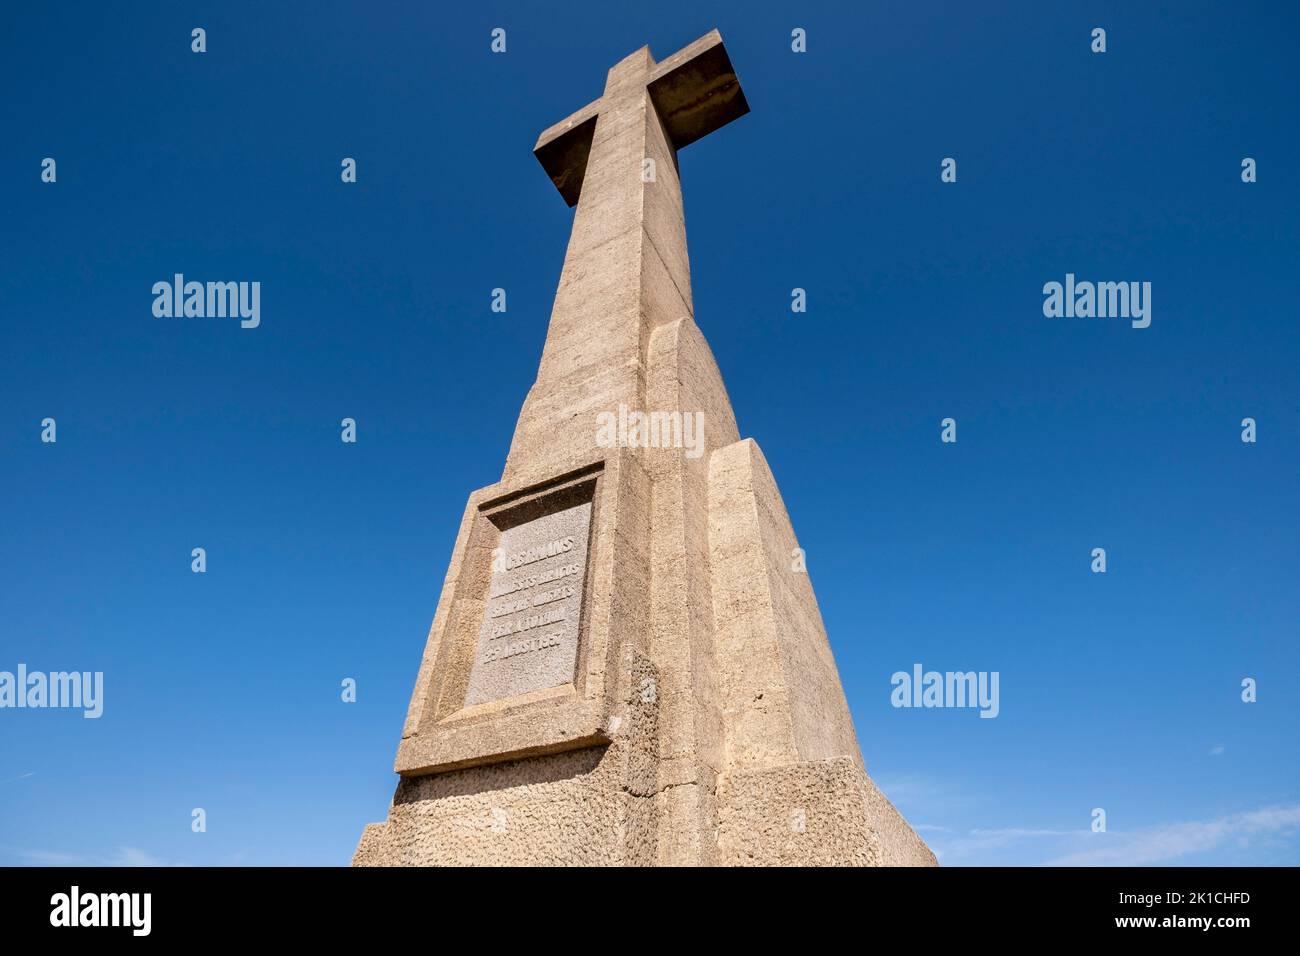 Cruz de picot, Santuario de la Mare de Déu de Sant Salvador, siglo XIV, Felanitx, Mallorca, Islas Baleares, España Foto de stock